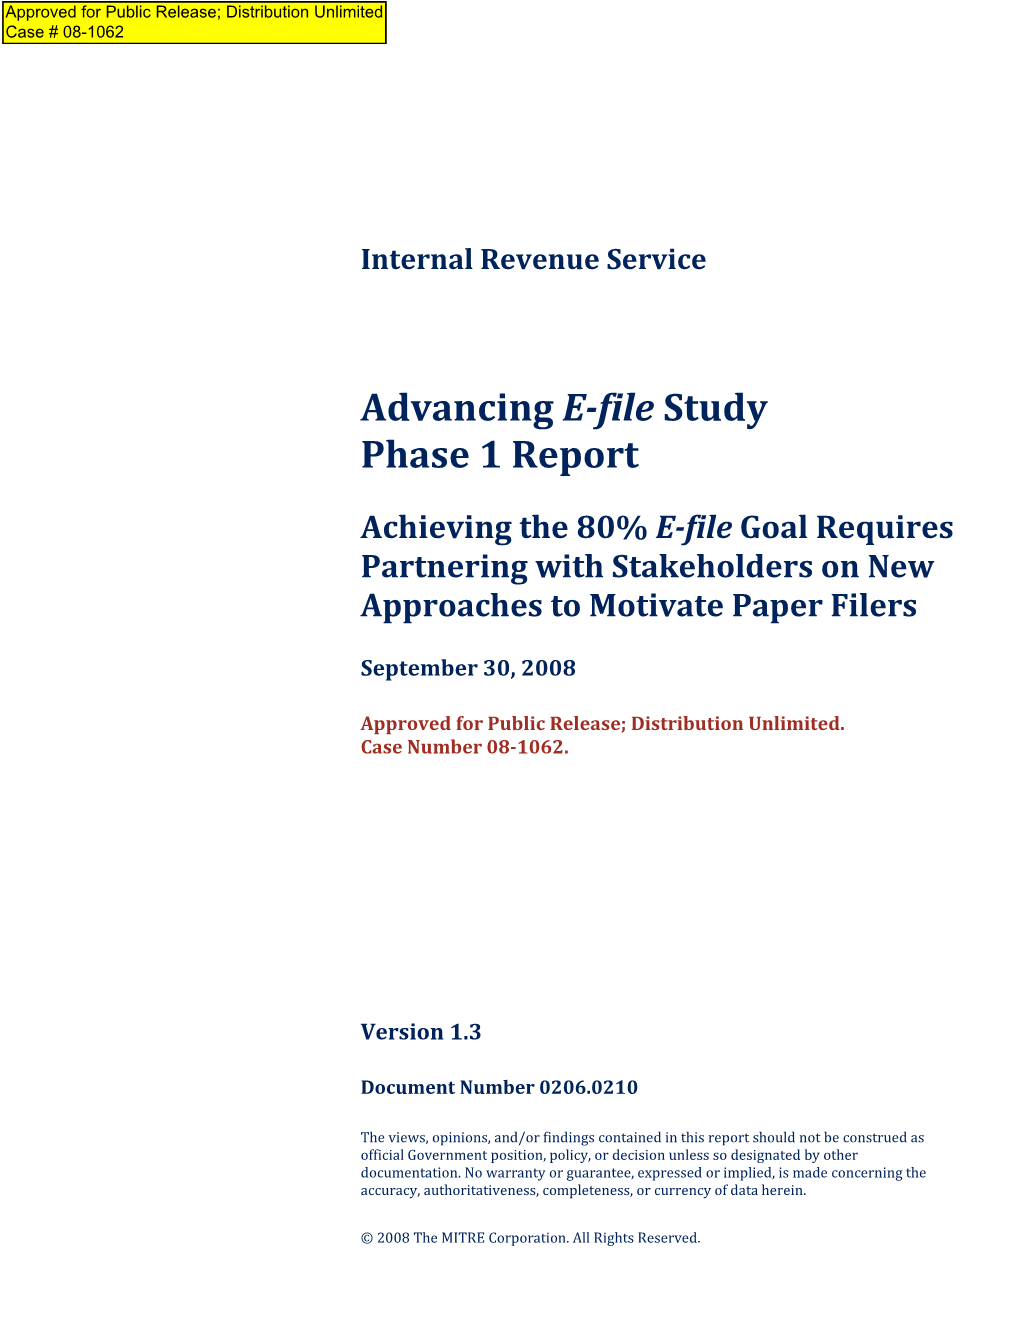 IRS Advancing E-File Study Phase 1 Report